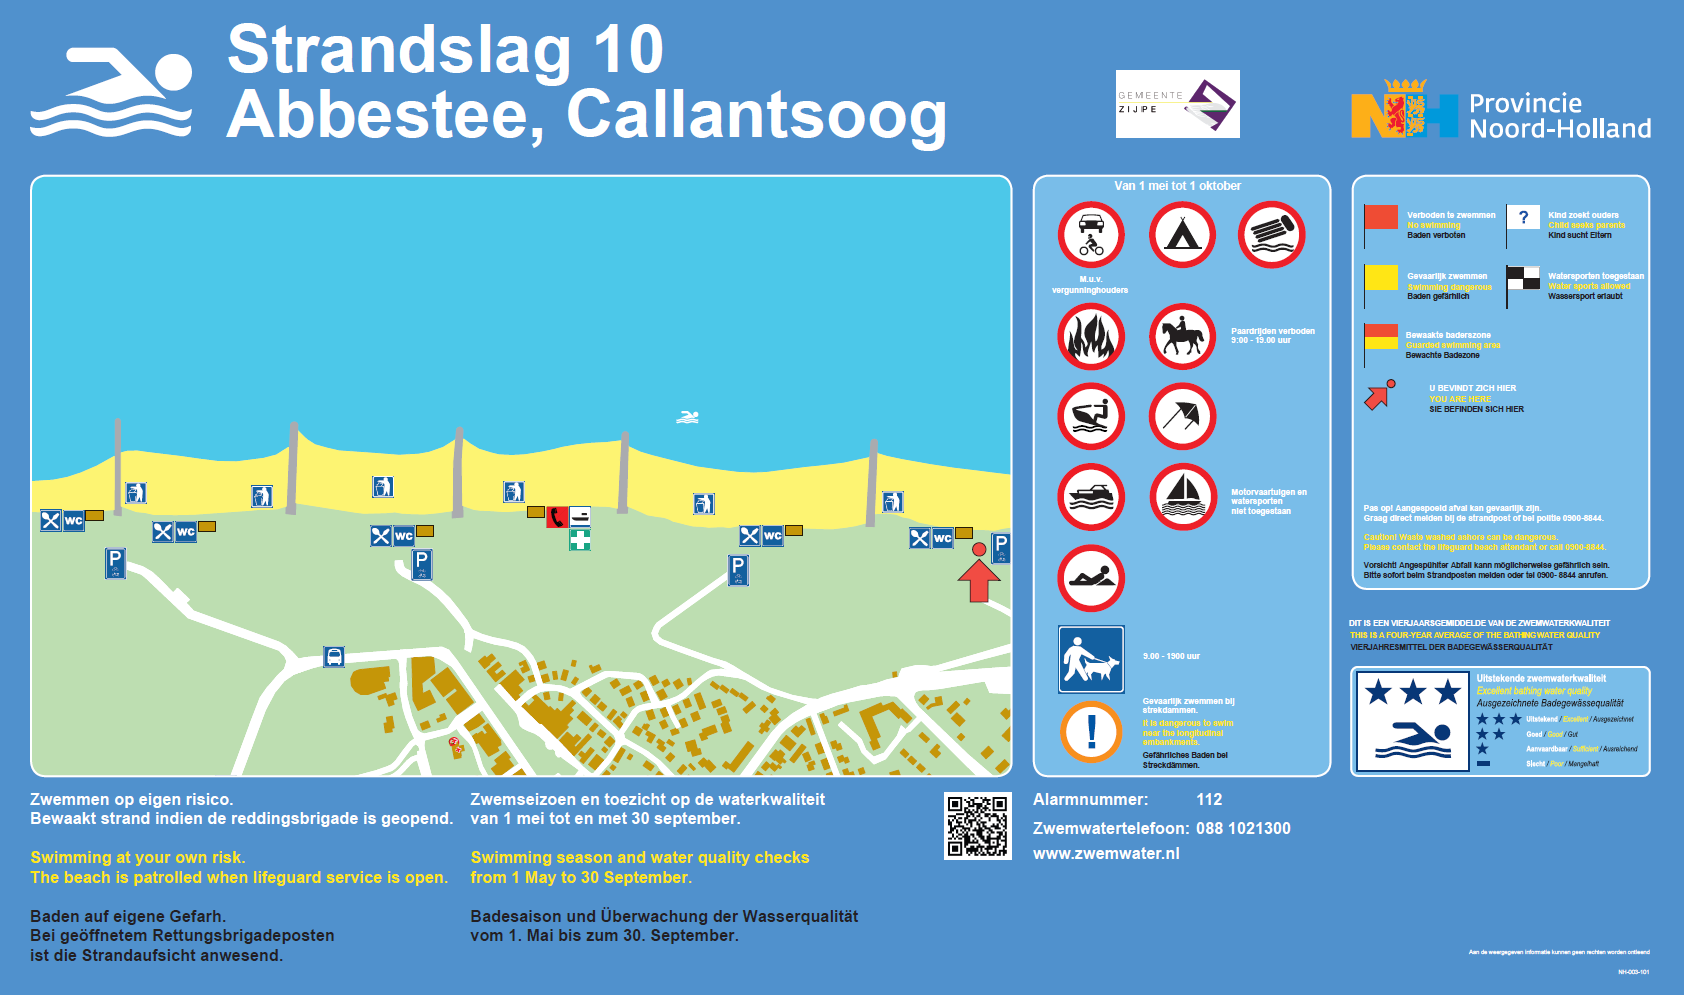 The information board at the swimming location Callantsoog, Strandslag 10 Abbestee